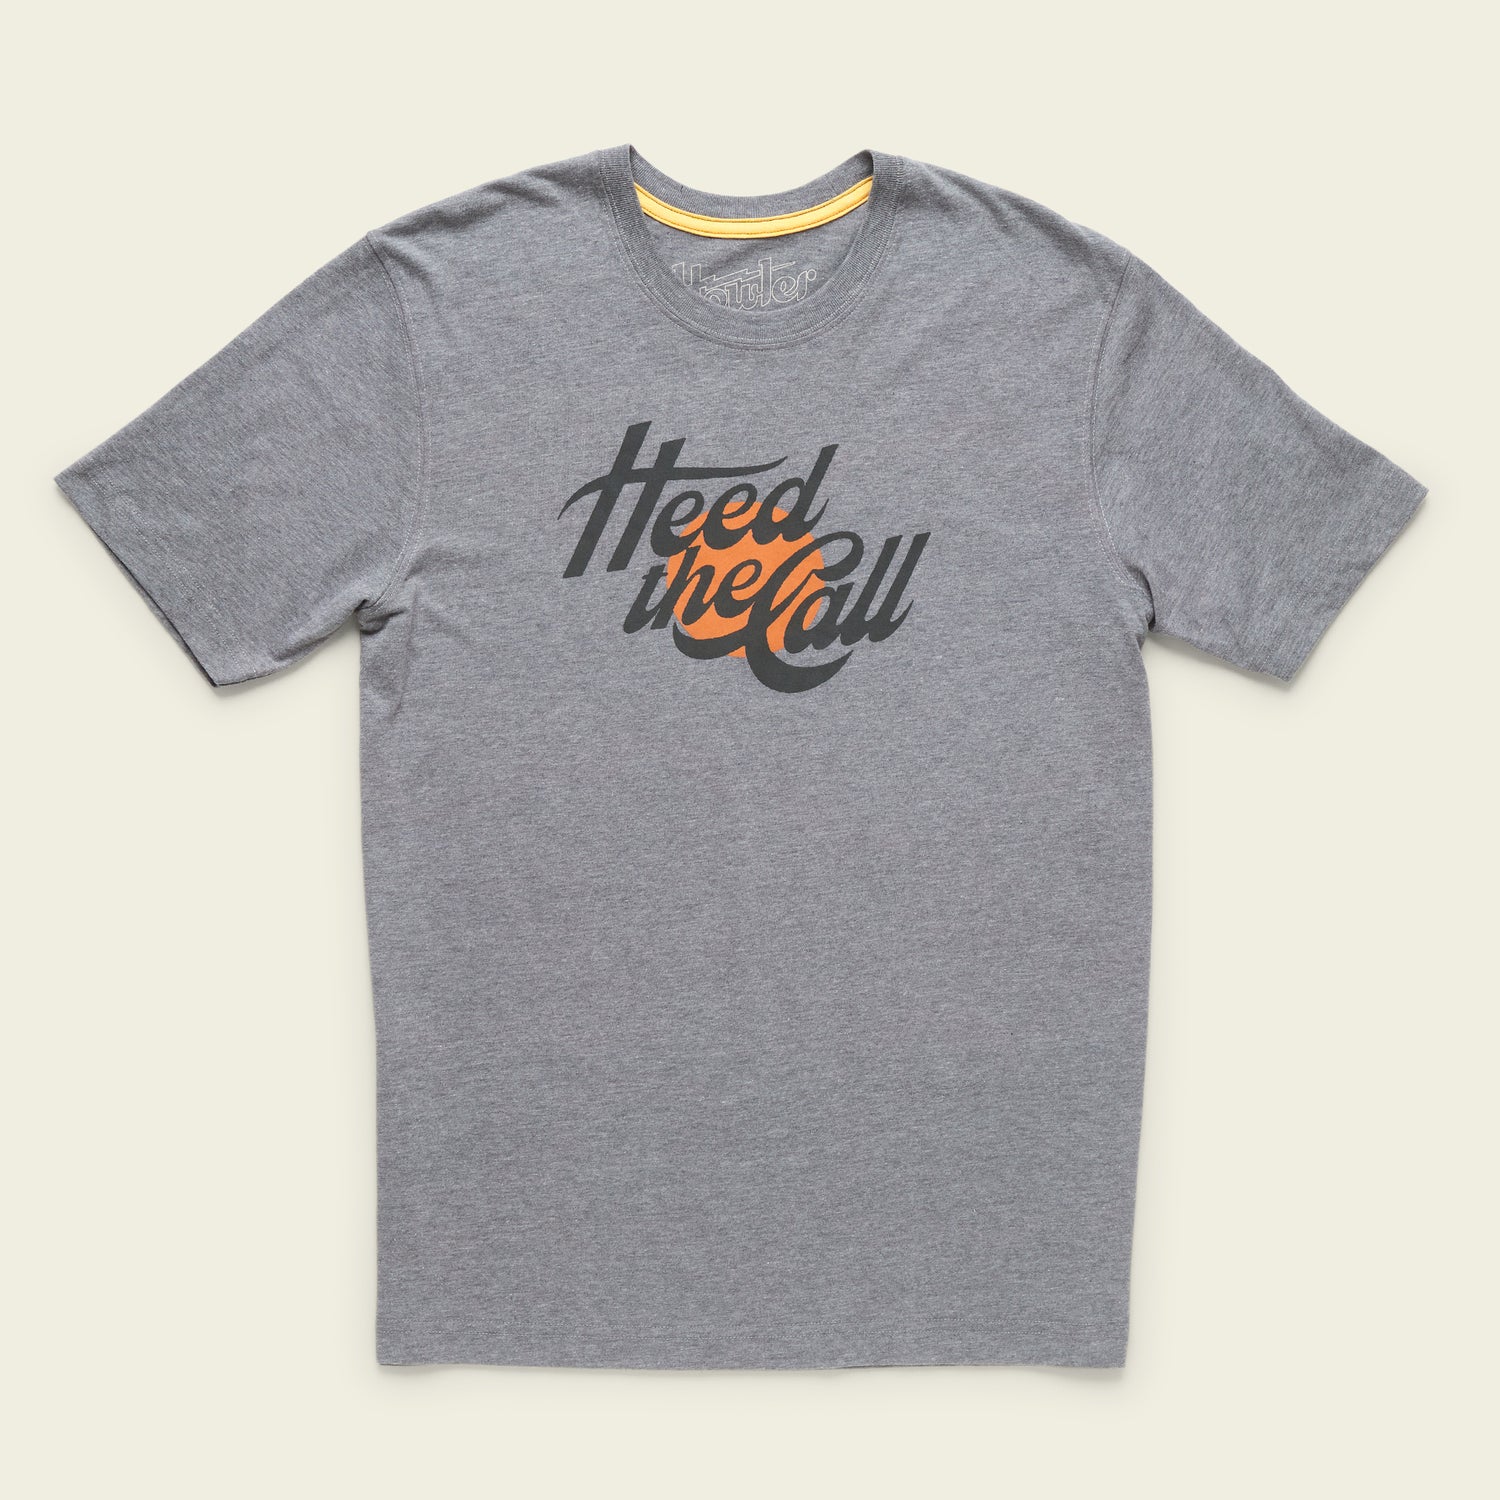 Howler Brothers HTC Flourish T-Shirt - Gray Heather Medium